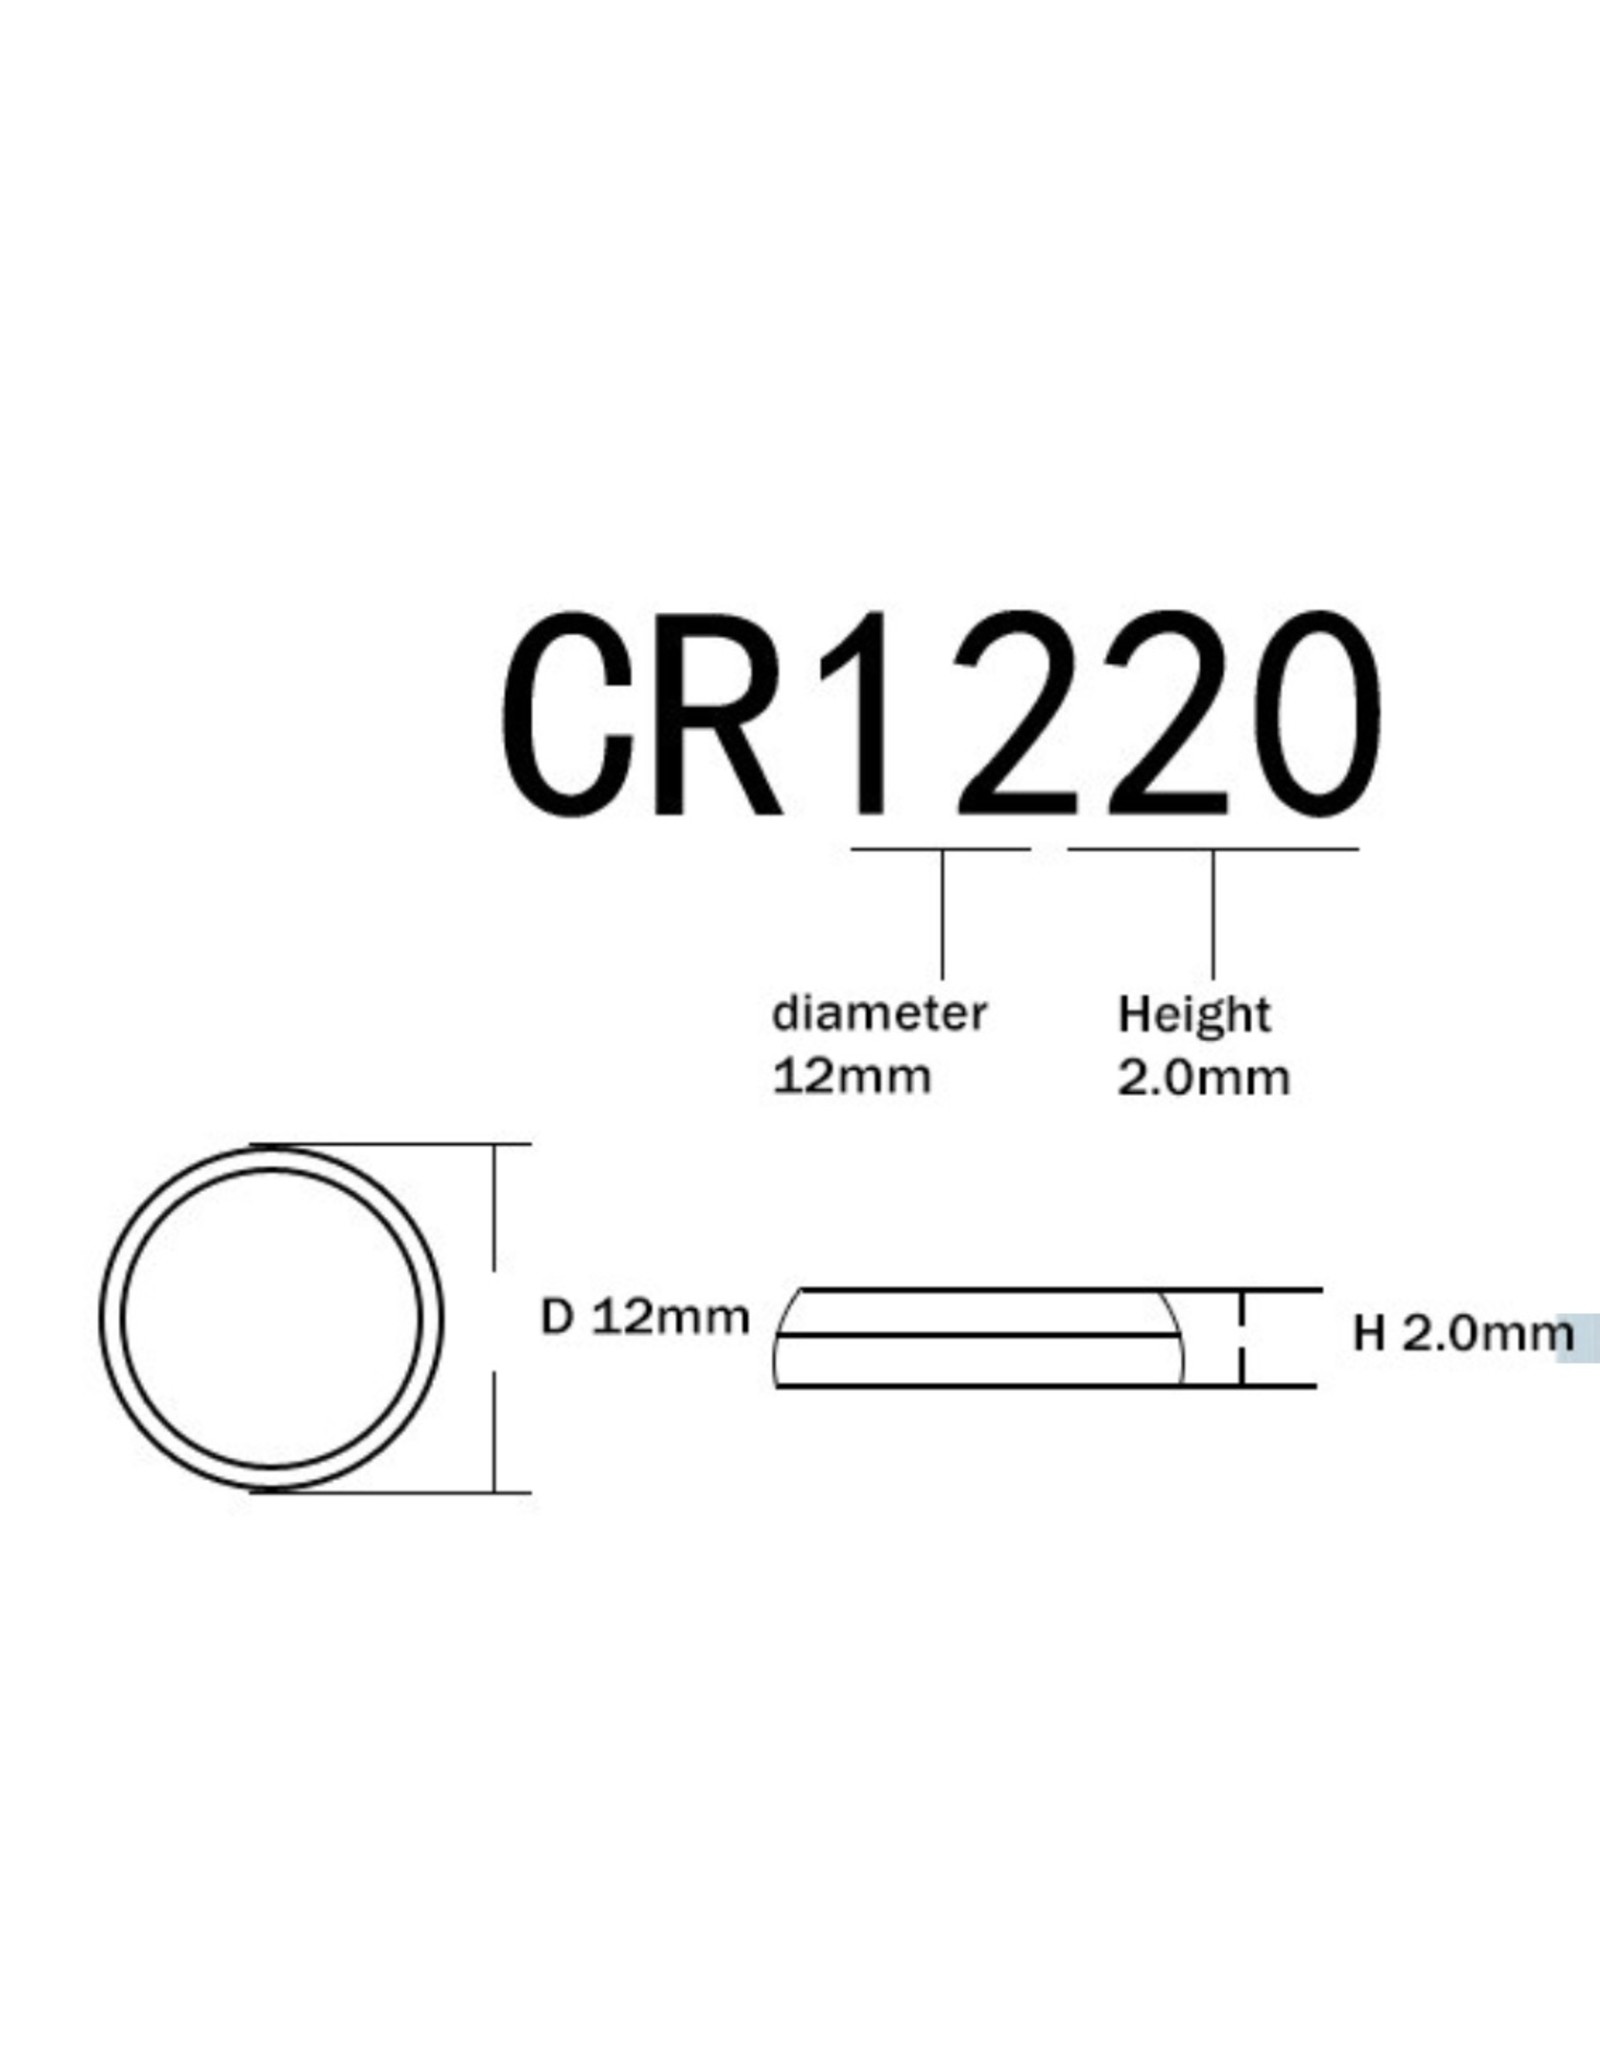 Merkloos CR1220 3V lithium knoopcel batterijen, Horloge-knoopcel batterij, Auto-afstandsbediening CR1220 ECR1220 LM1220